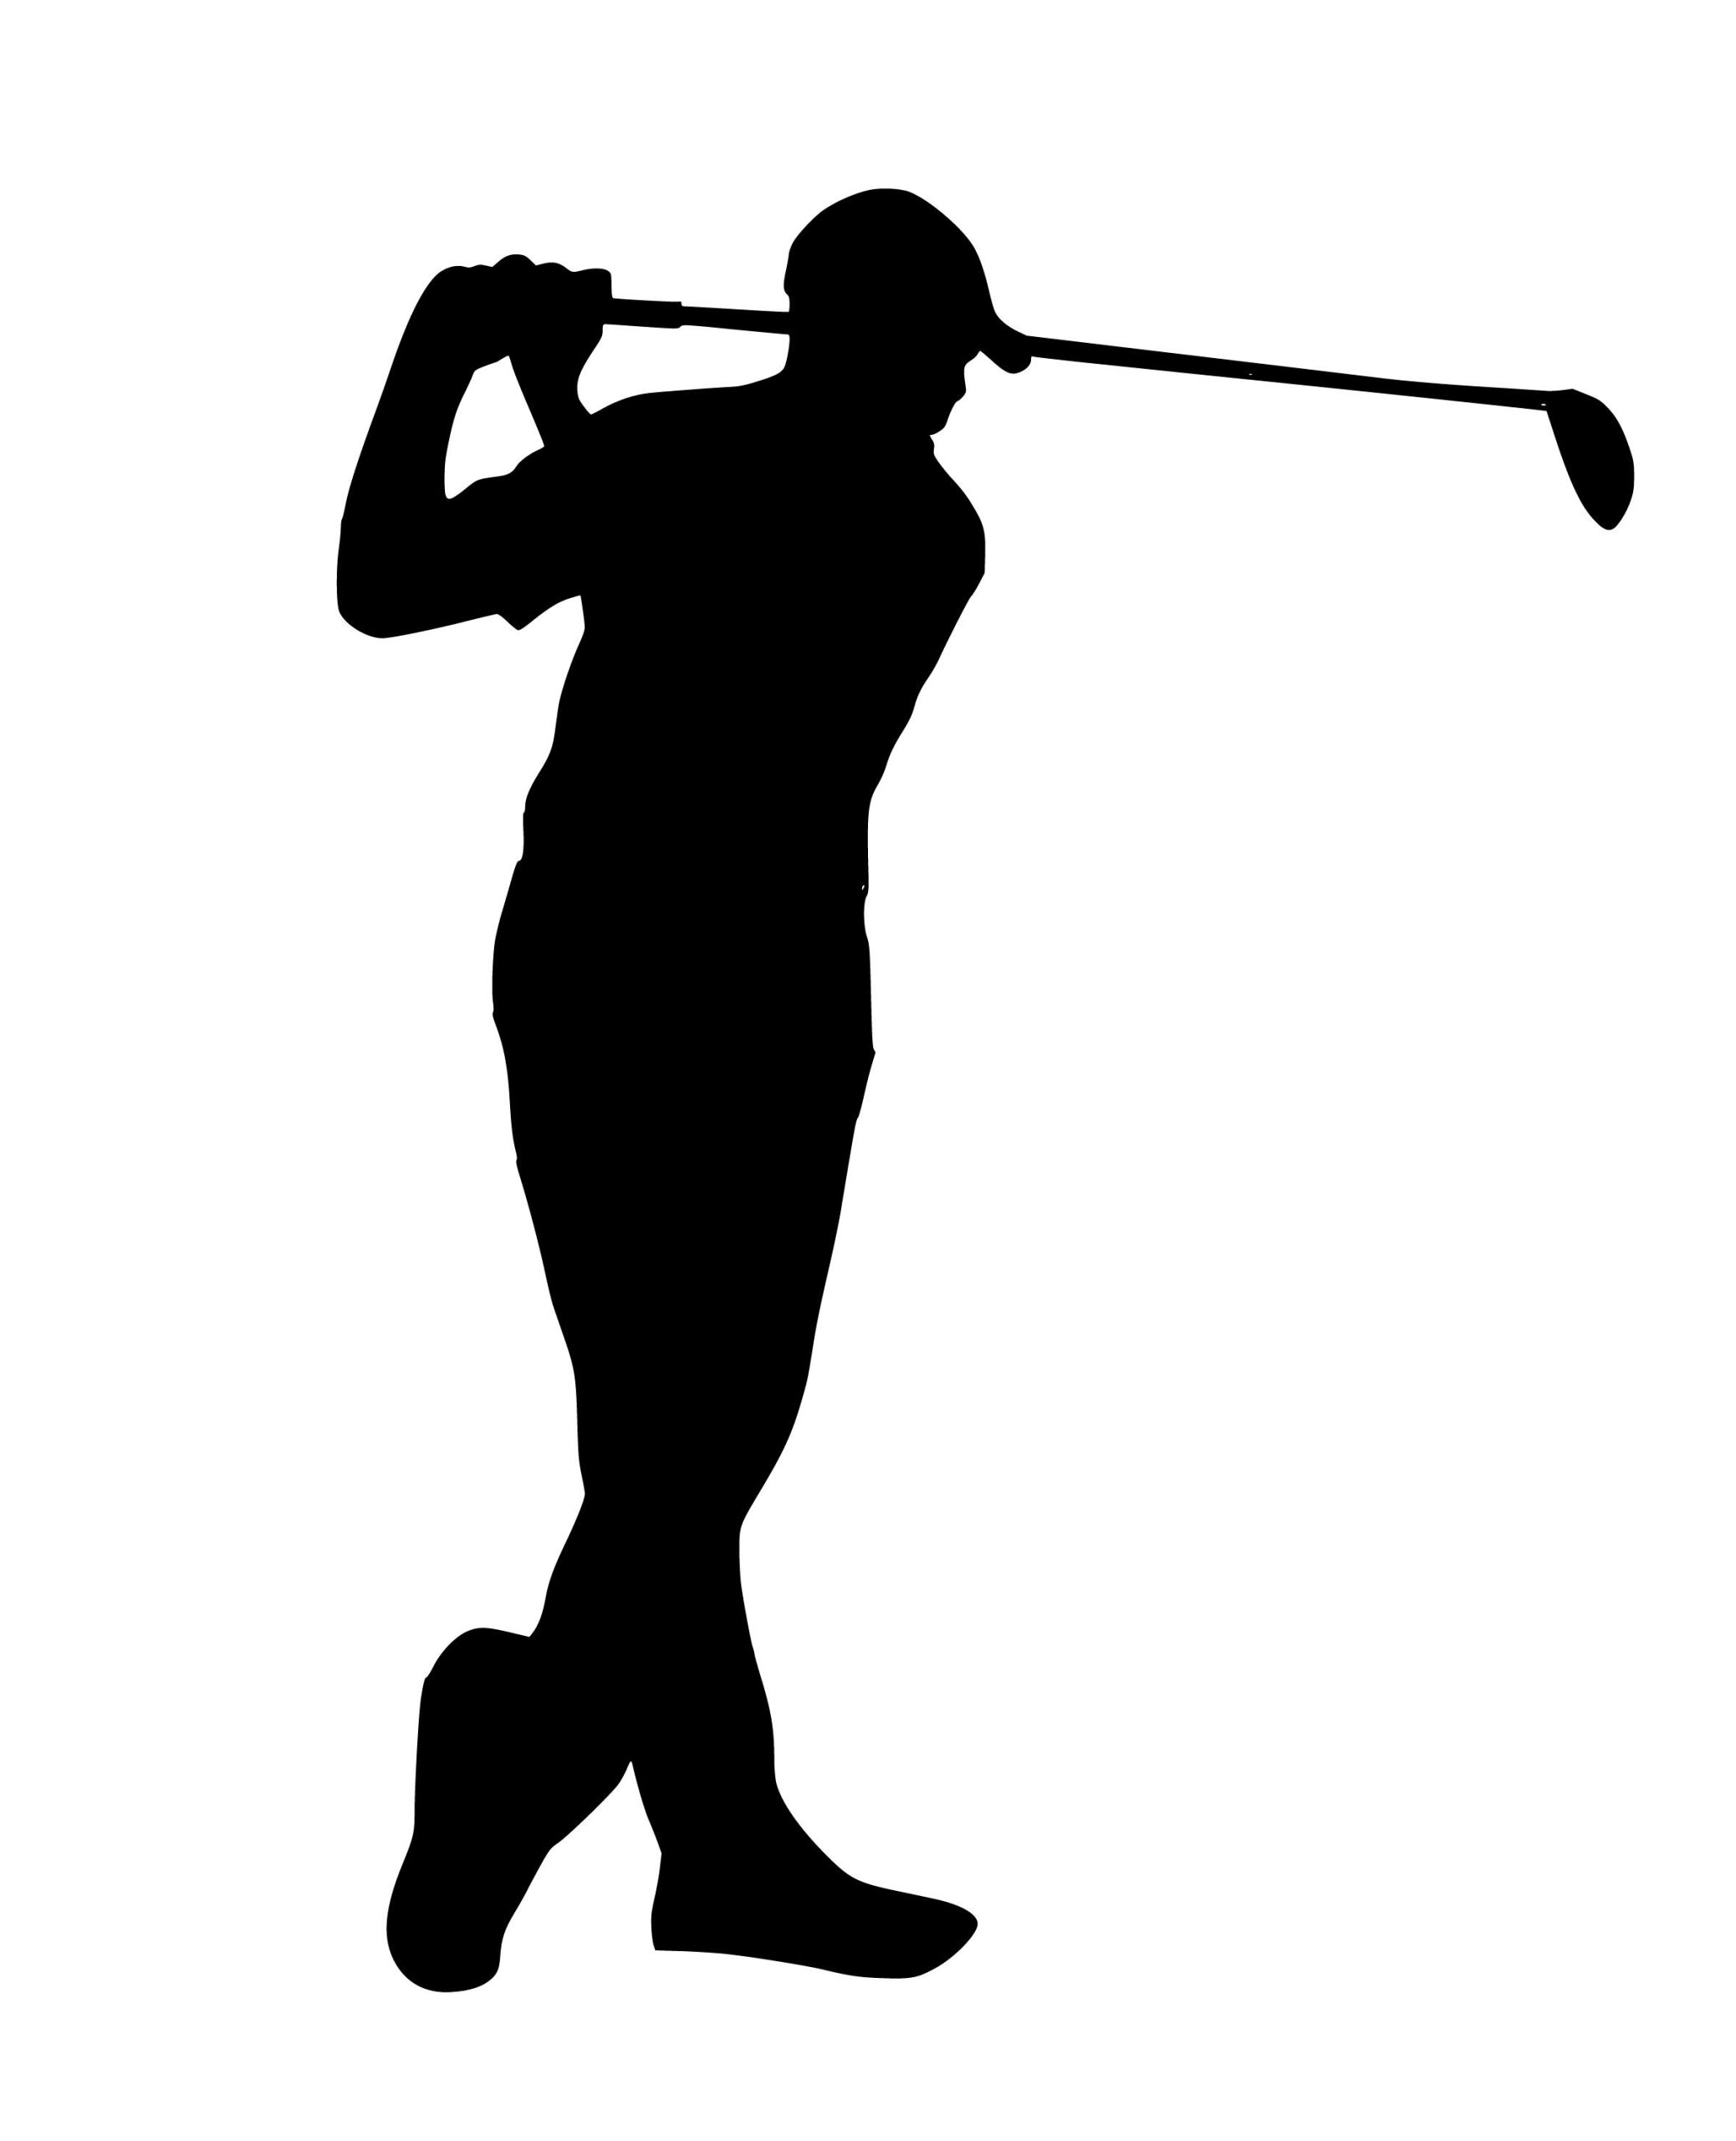 Pi Upsilon Lambda Charitable Foundation Scholarship Golf Tournament